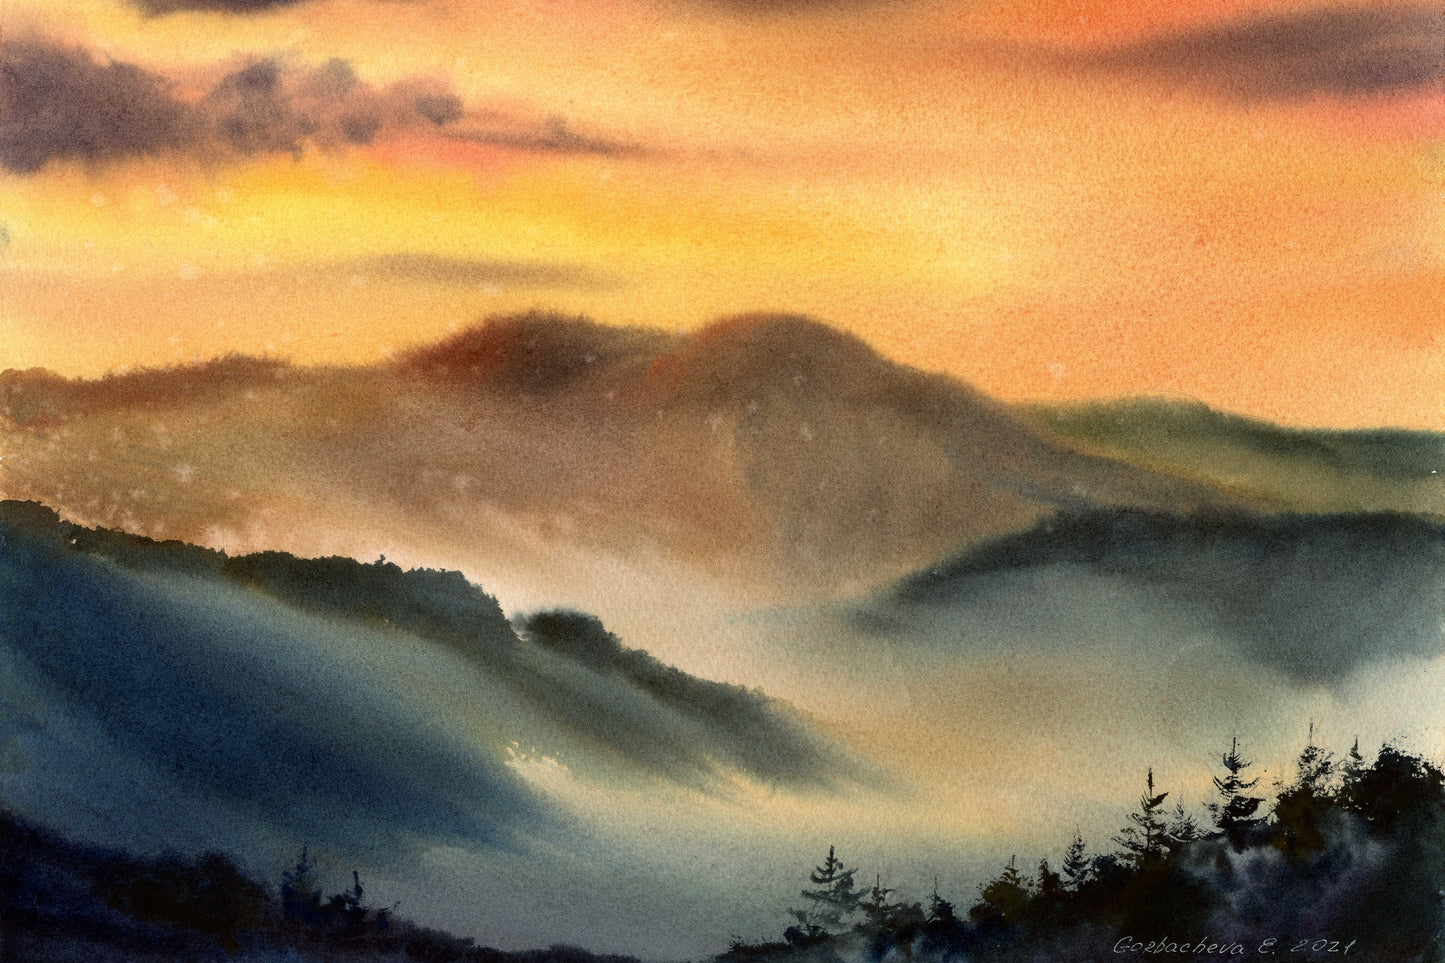 Painted Sunset Wall Art, Mountain Art Print, Modern Landscape Wall Decor, Watercolor Painting, Boho Prints